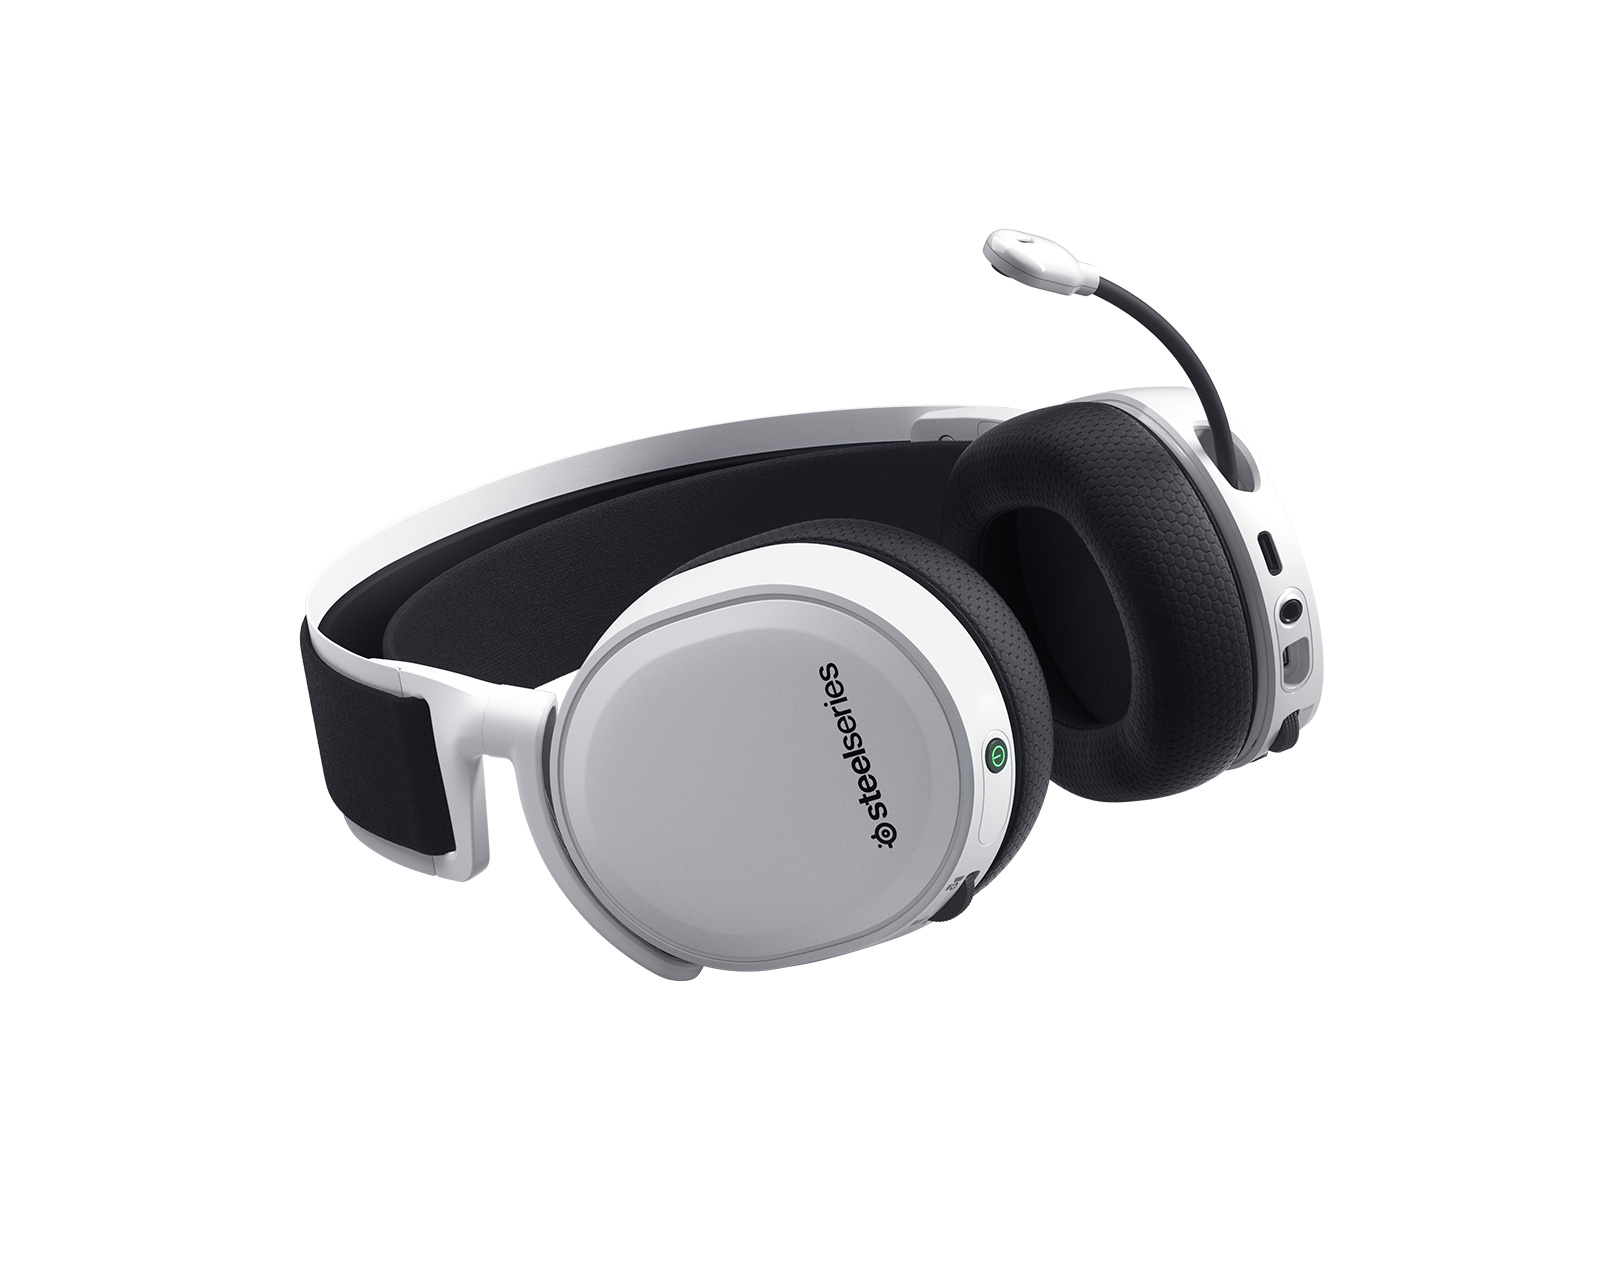 SteelSeries Arctis 7 Wireless Gaming Headset